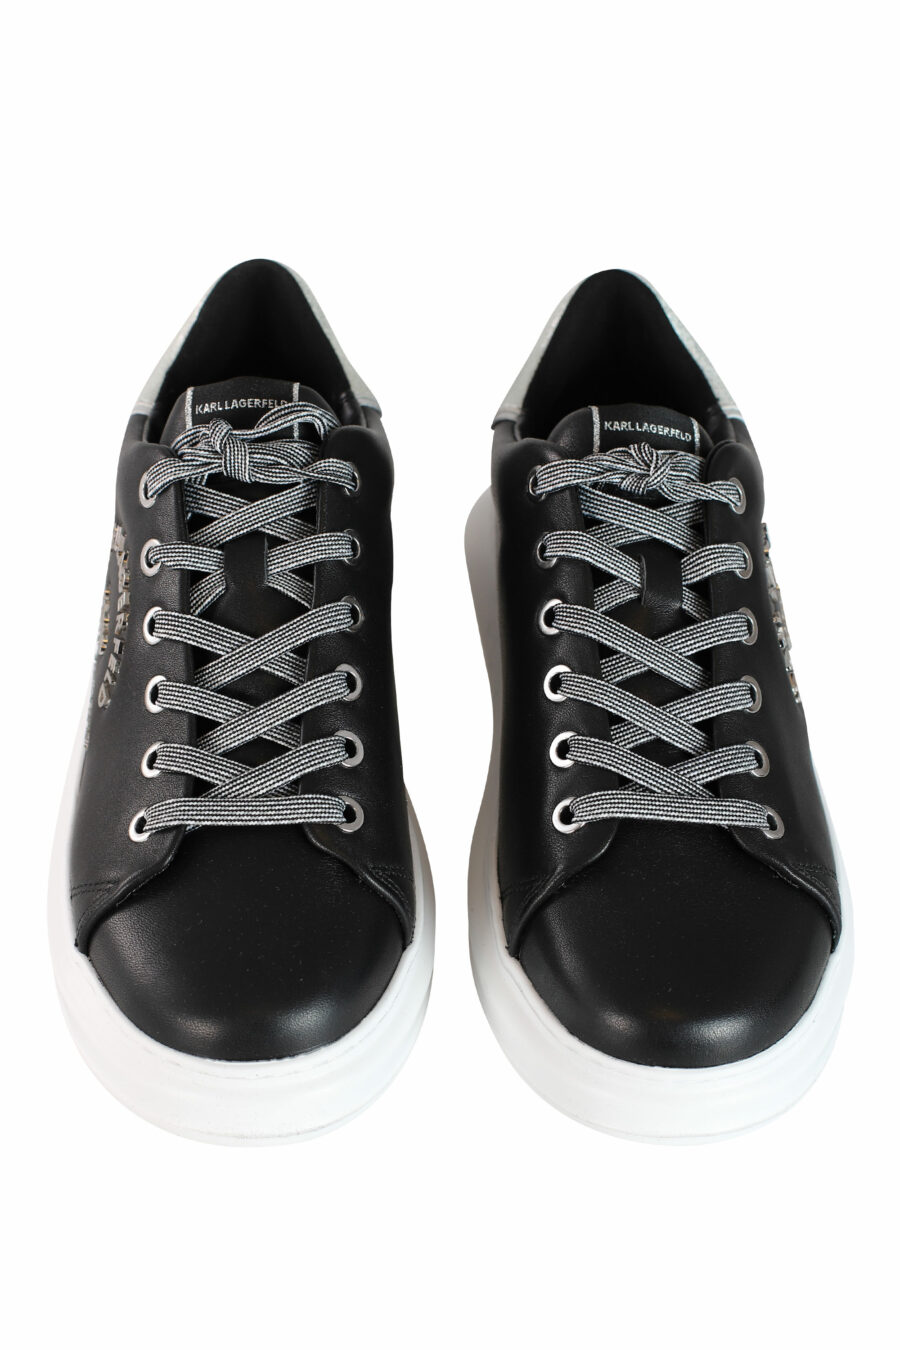 Zapatillas negras con detalles plateado y logo lettering "rue st guillaume" - IMG 3572